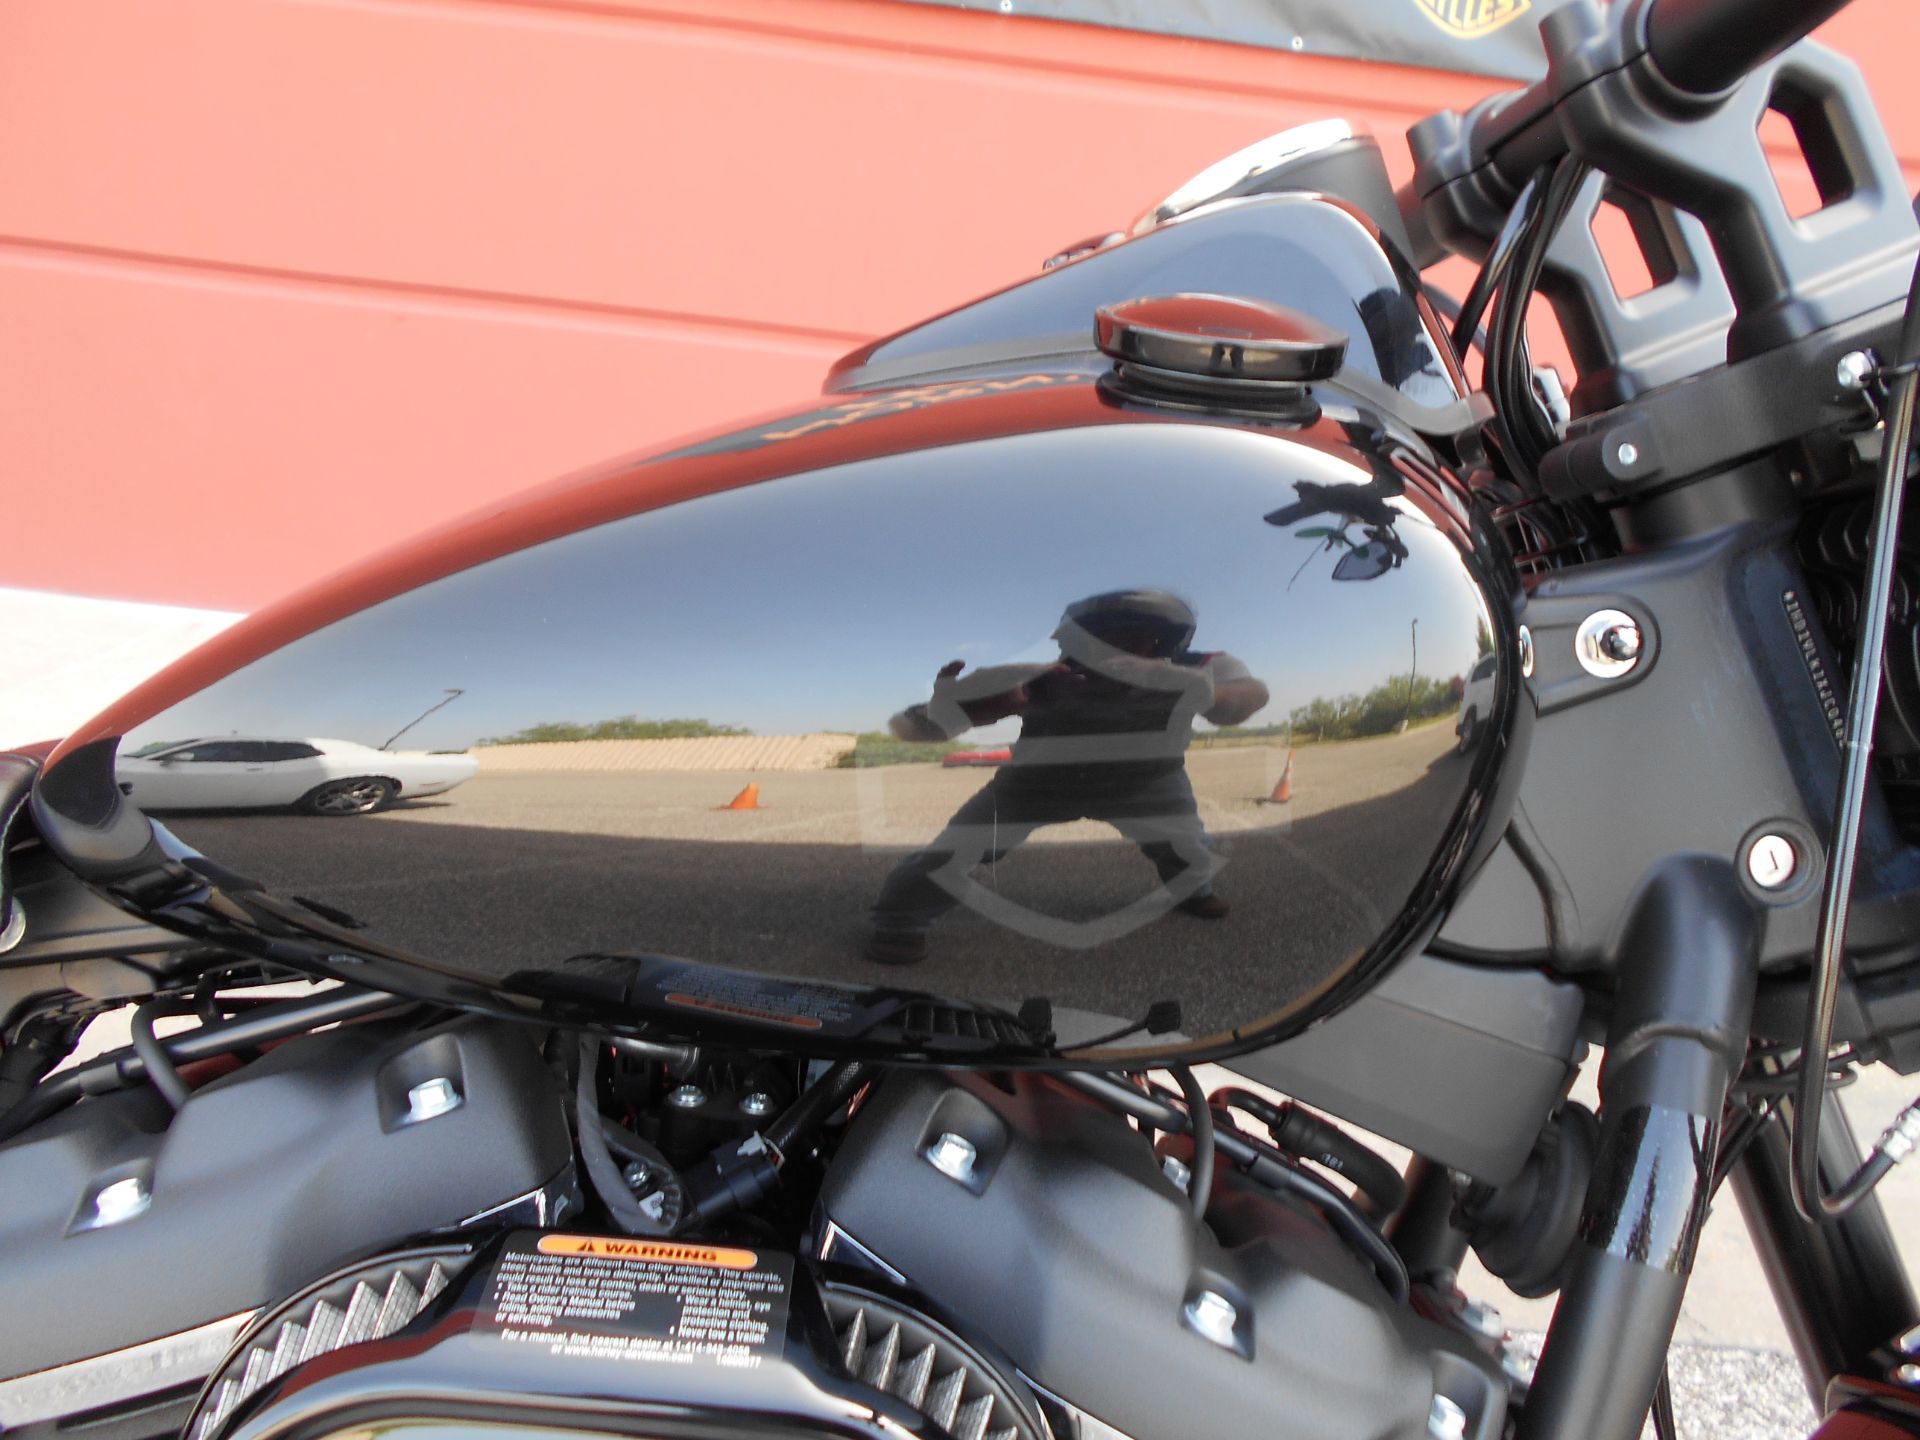 2018 Harley-Davidson Fat Bob® 114 in Temple, Texas - Photo 6